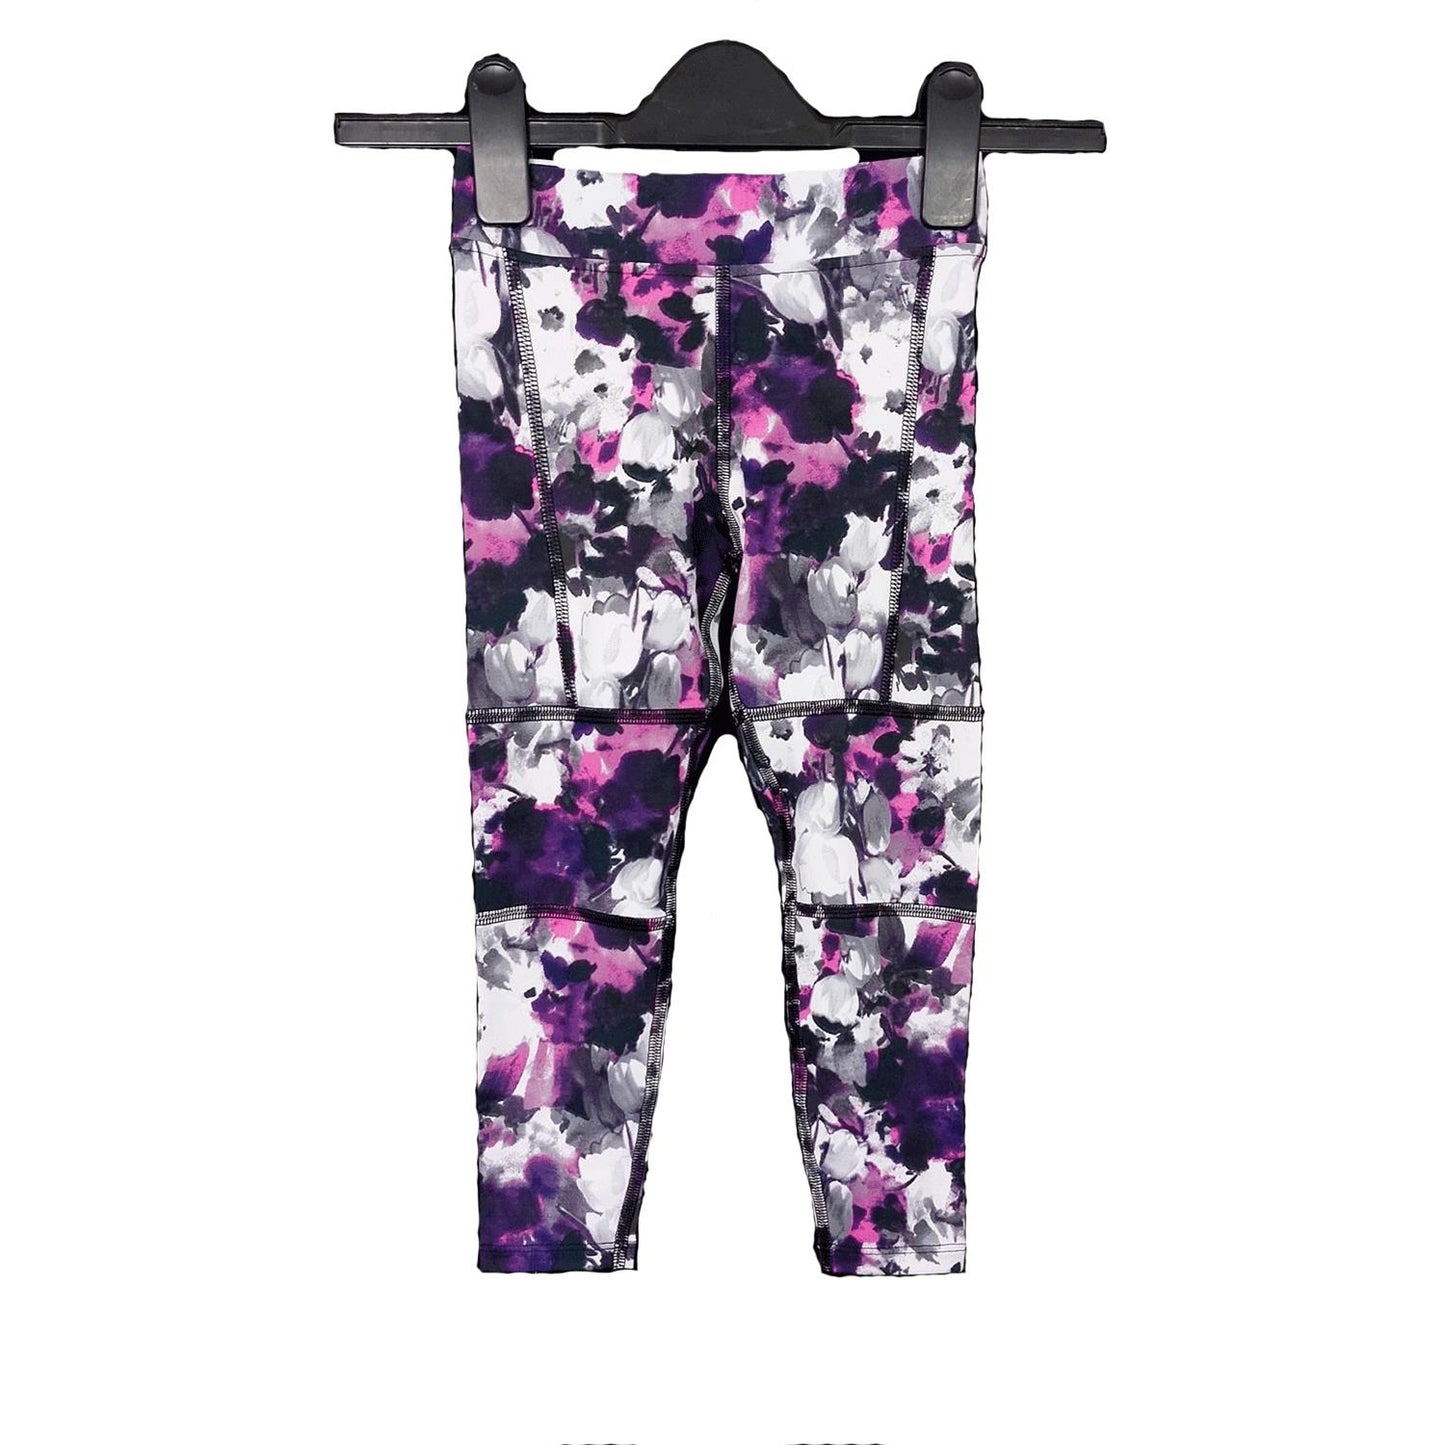 Girls' Purple Flower Leggings Sport Summer Party Stretch Chainstore Brand New